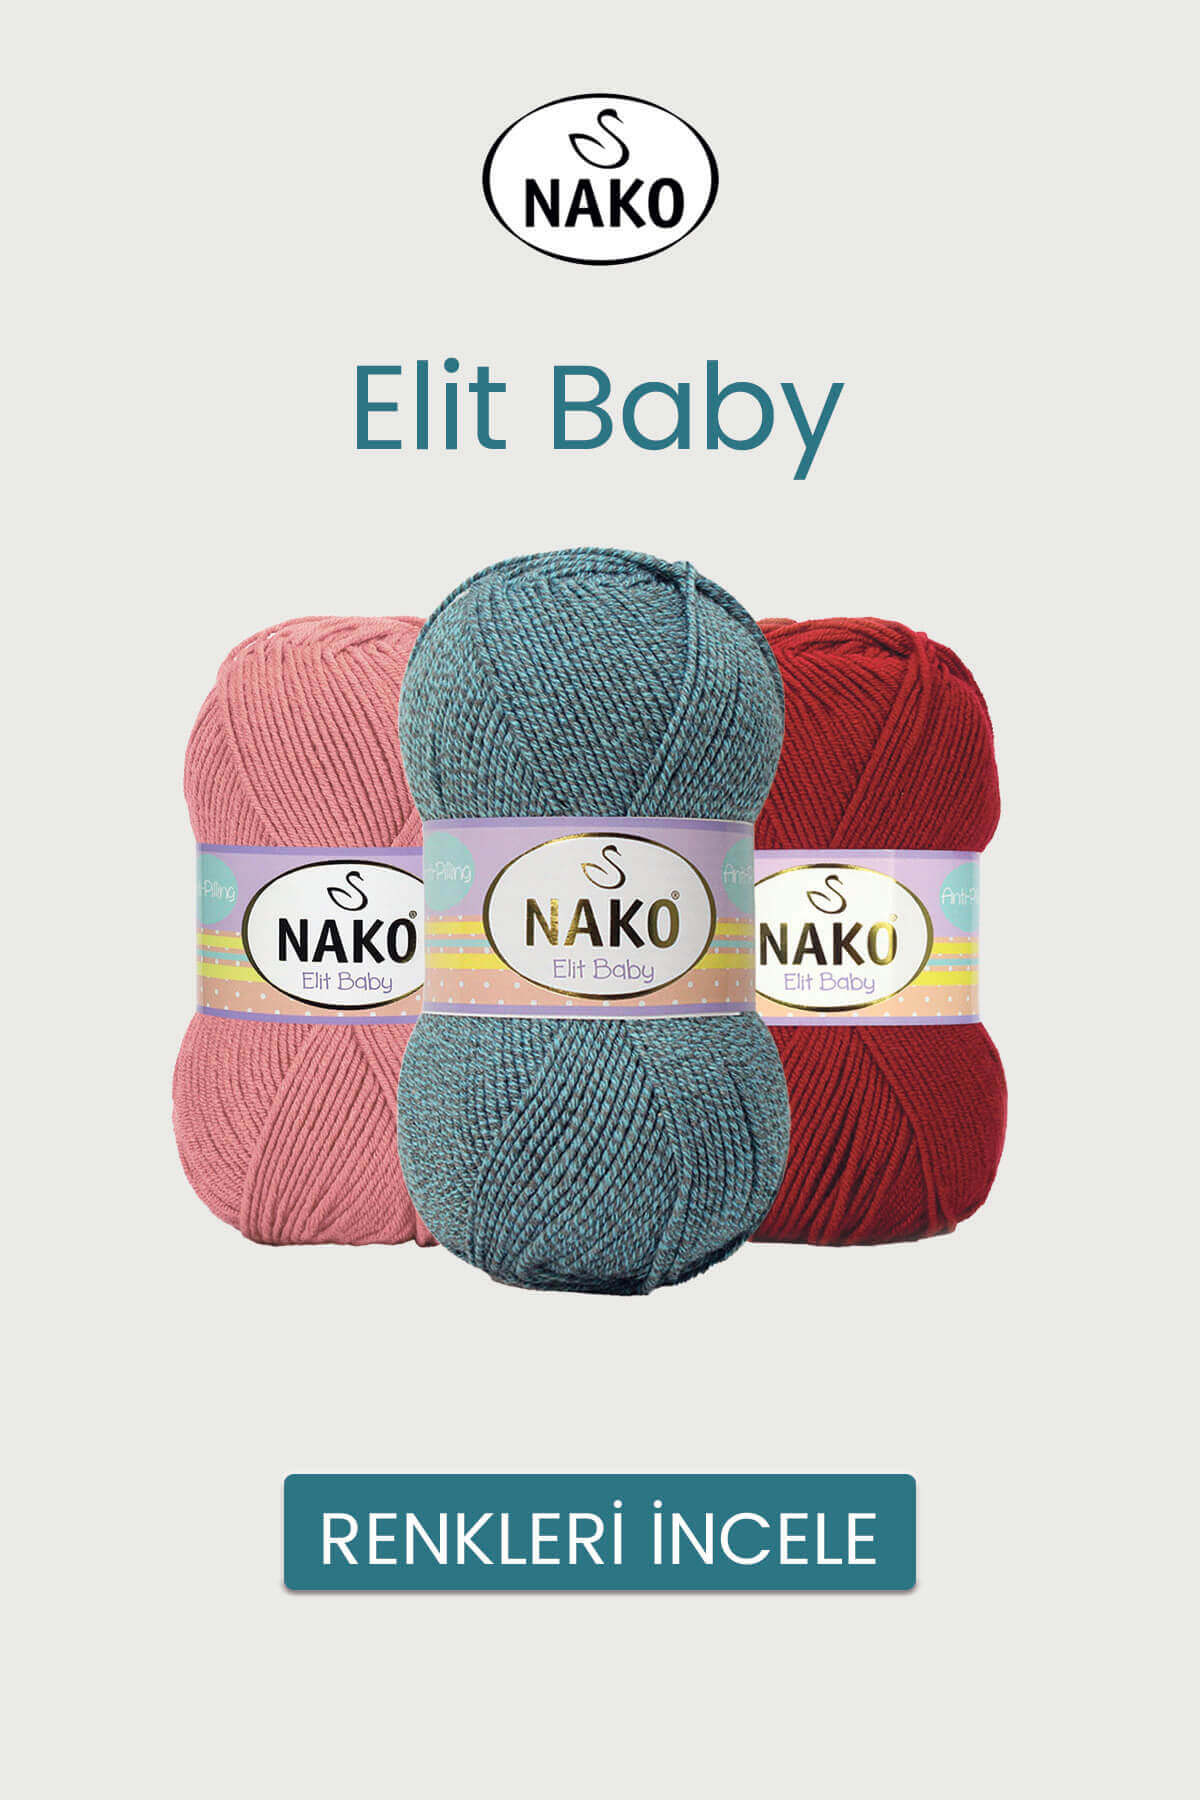 nako-elit-baby-tekstilland